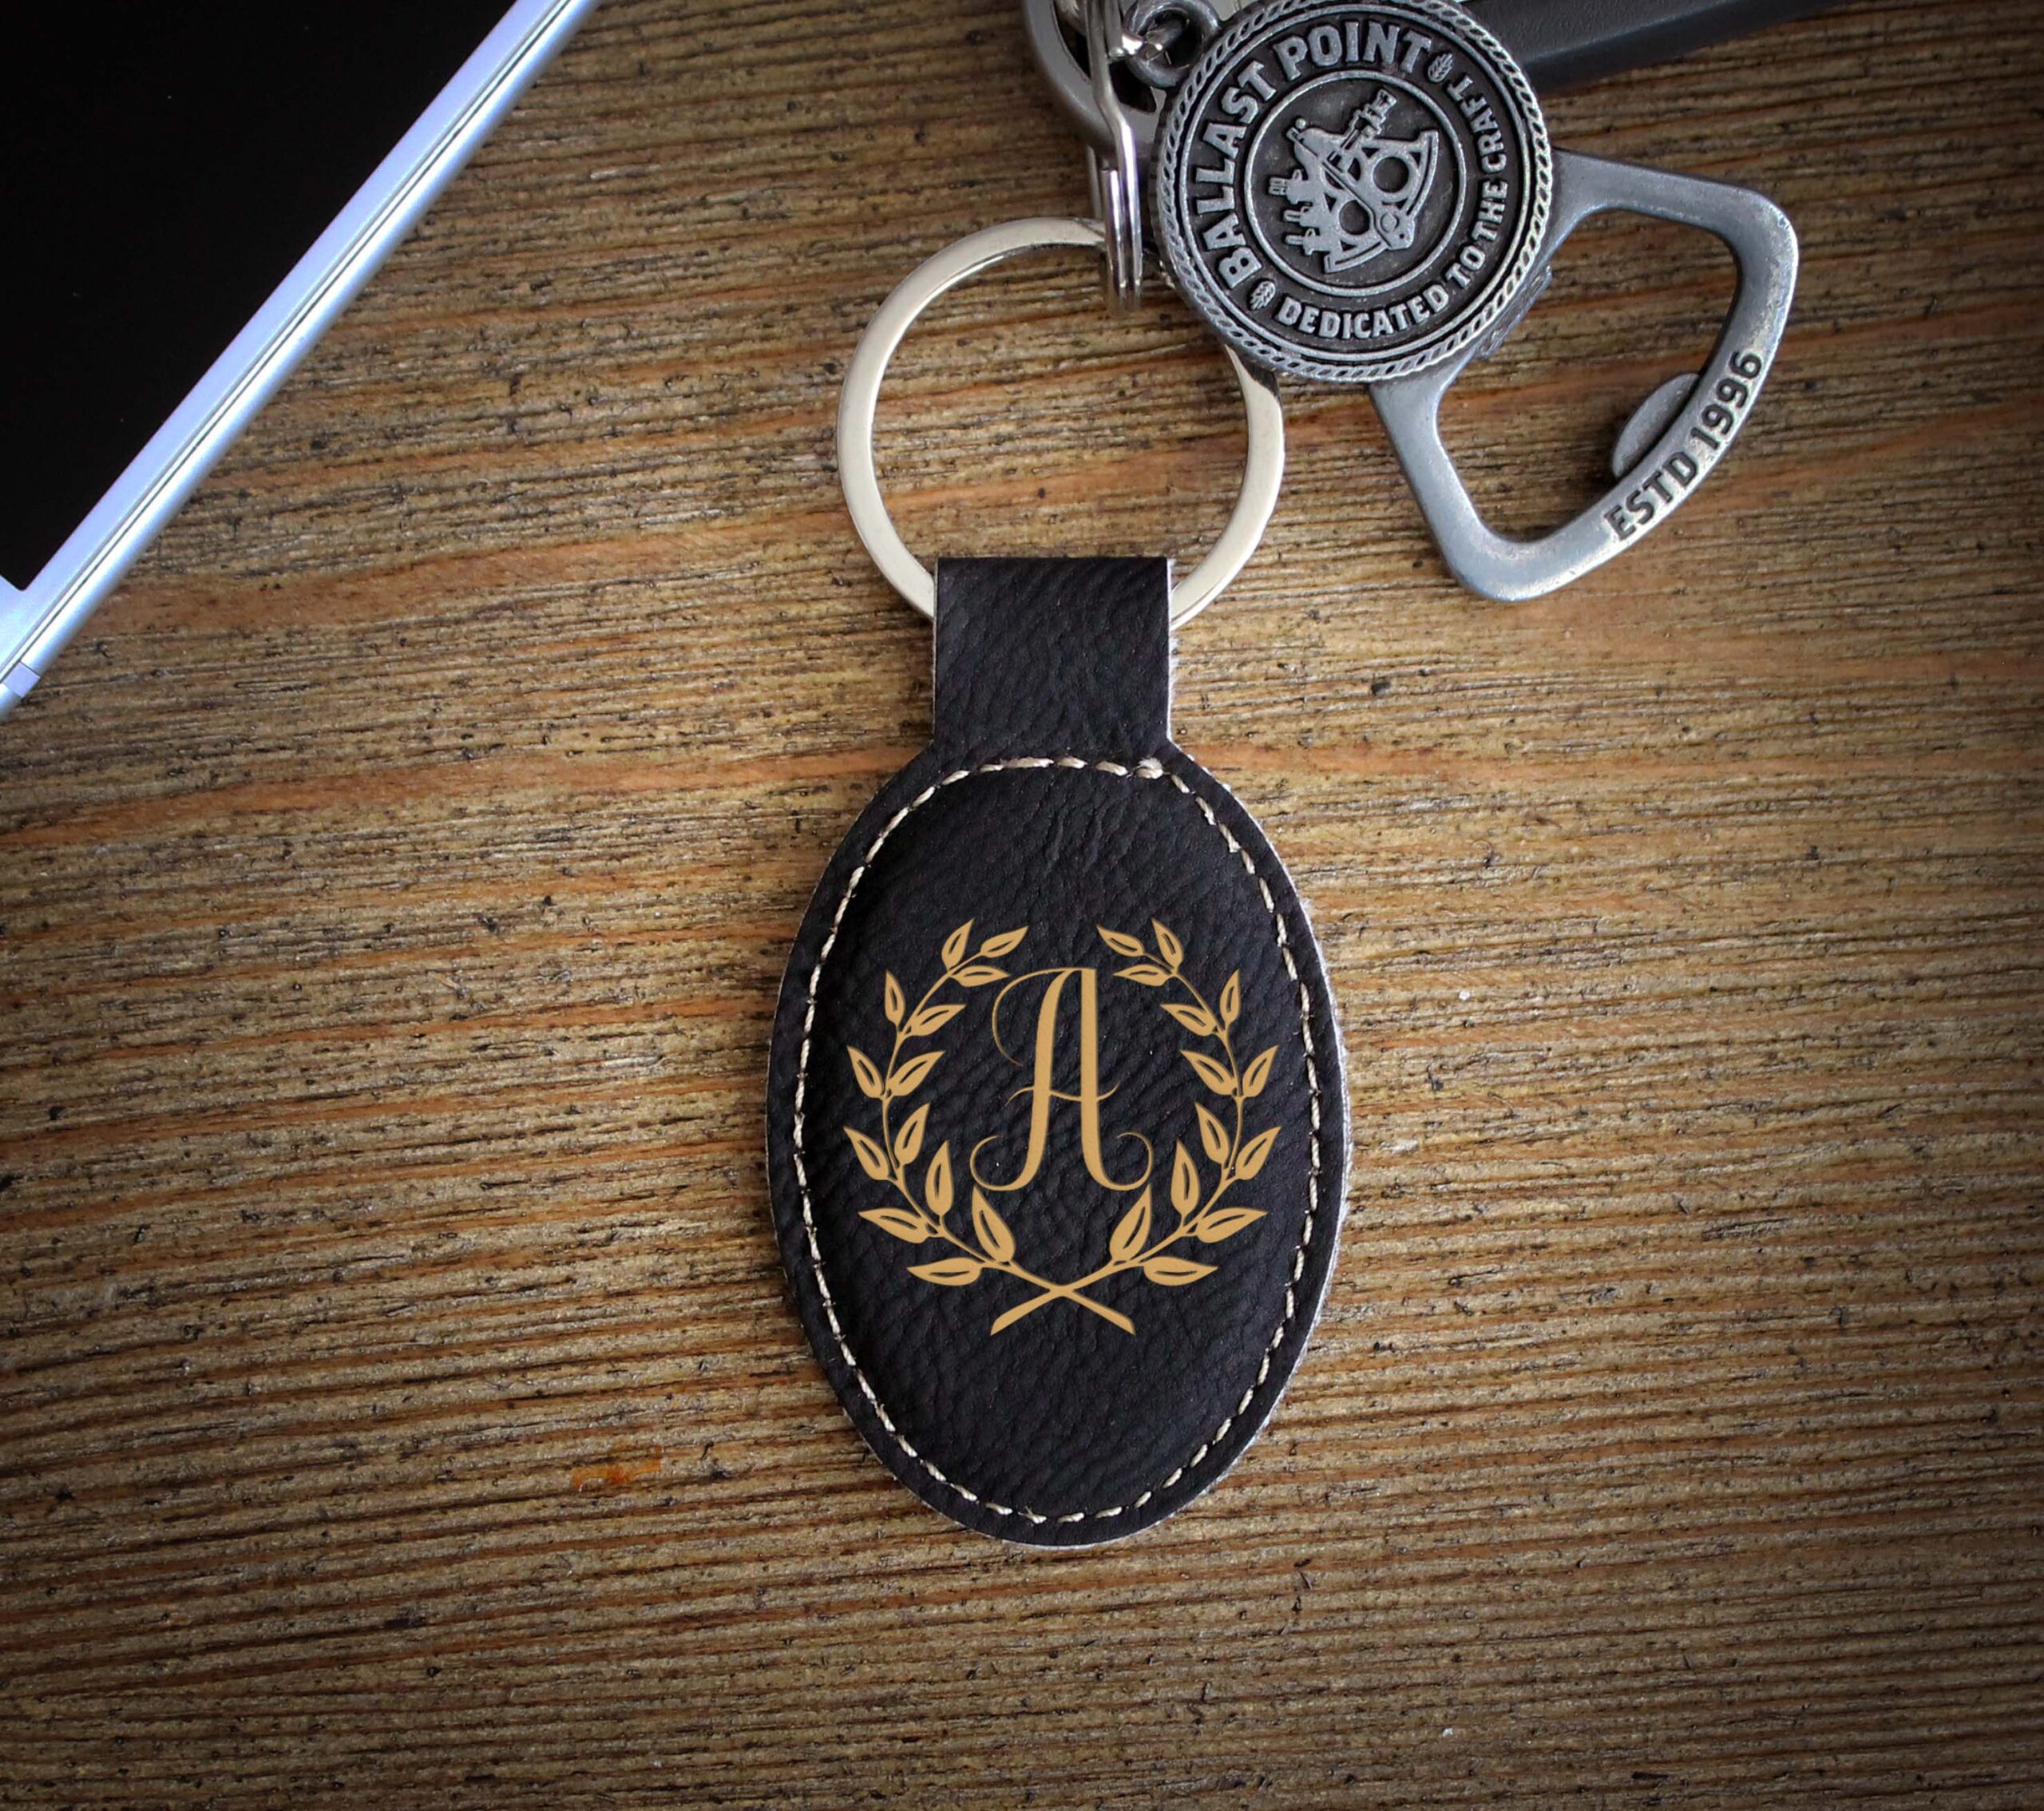 Custom Key Chains, Engraved & Leatherette